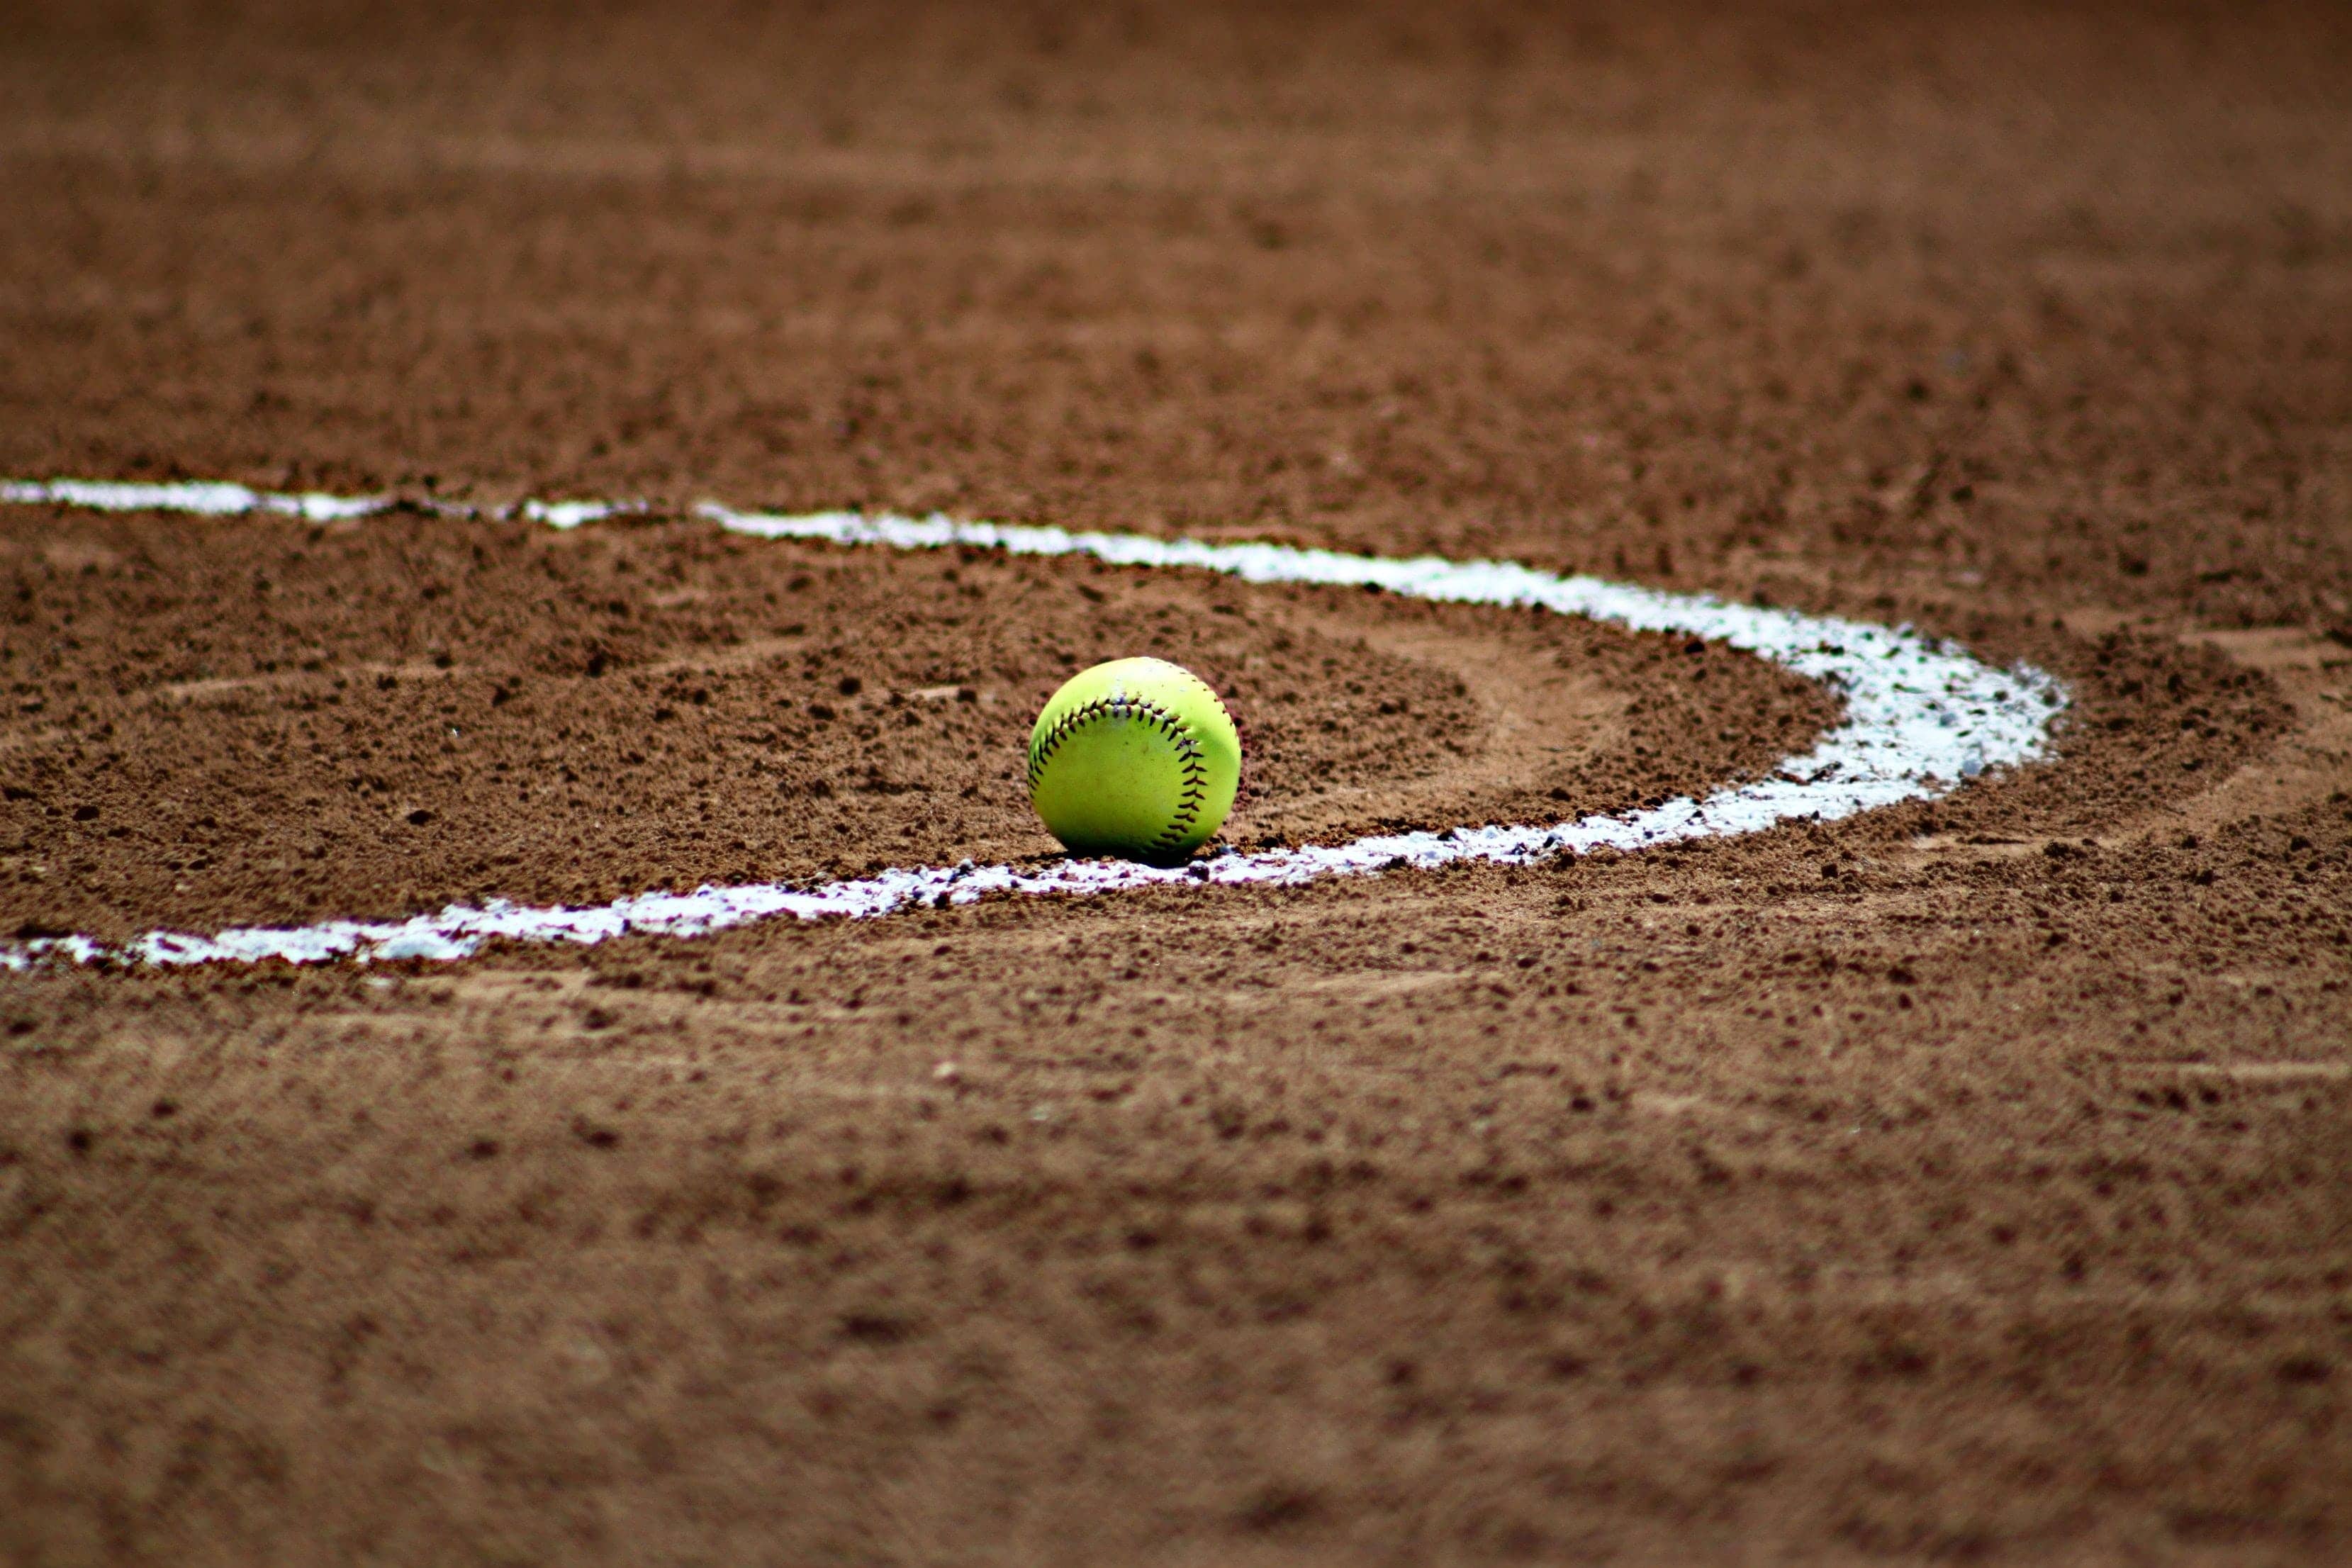 Close-up of a softball on a dirt softball field